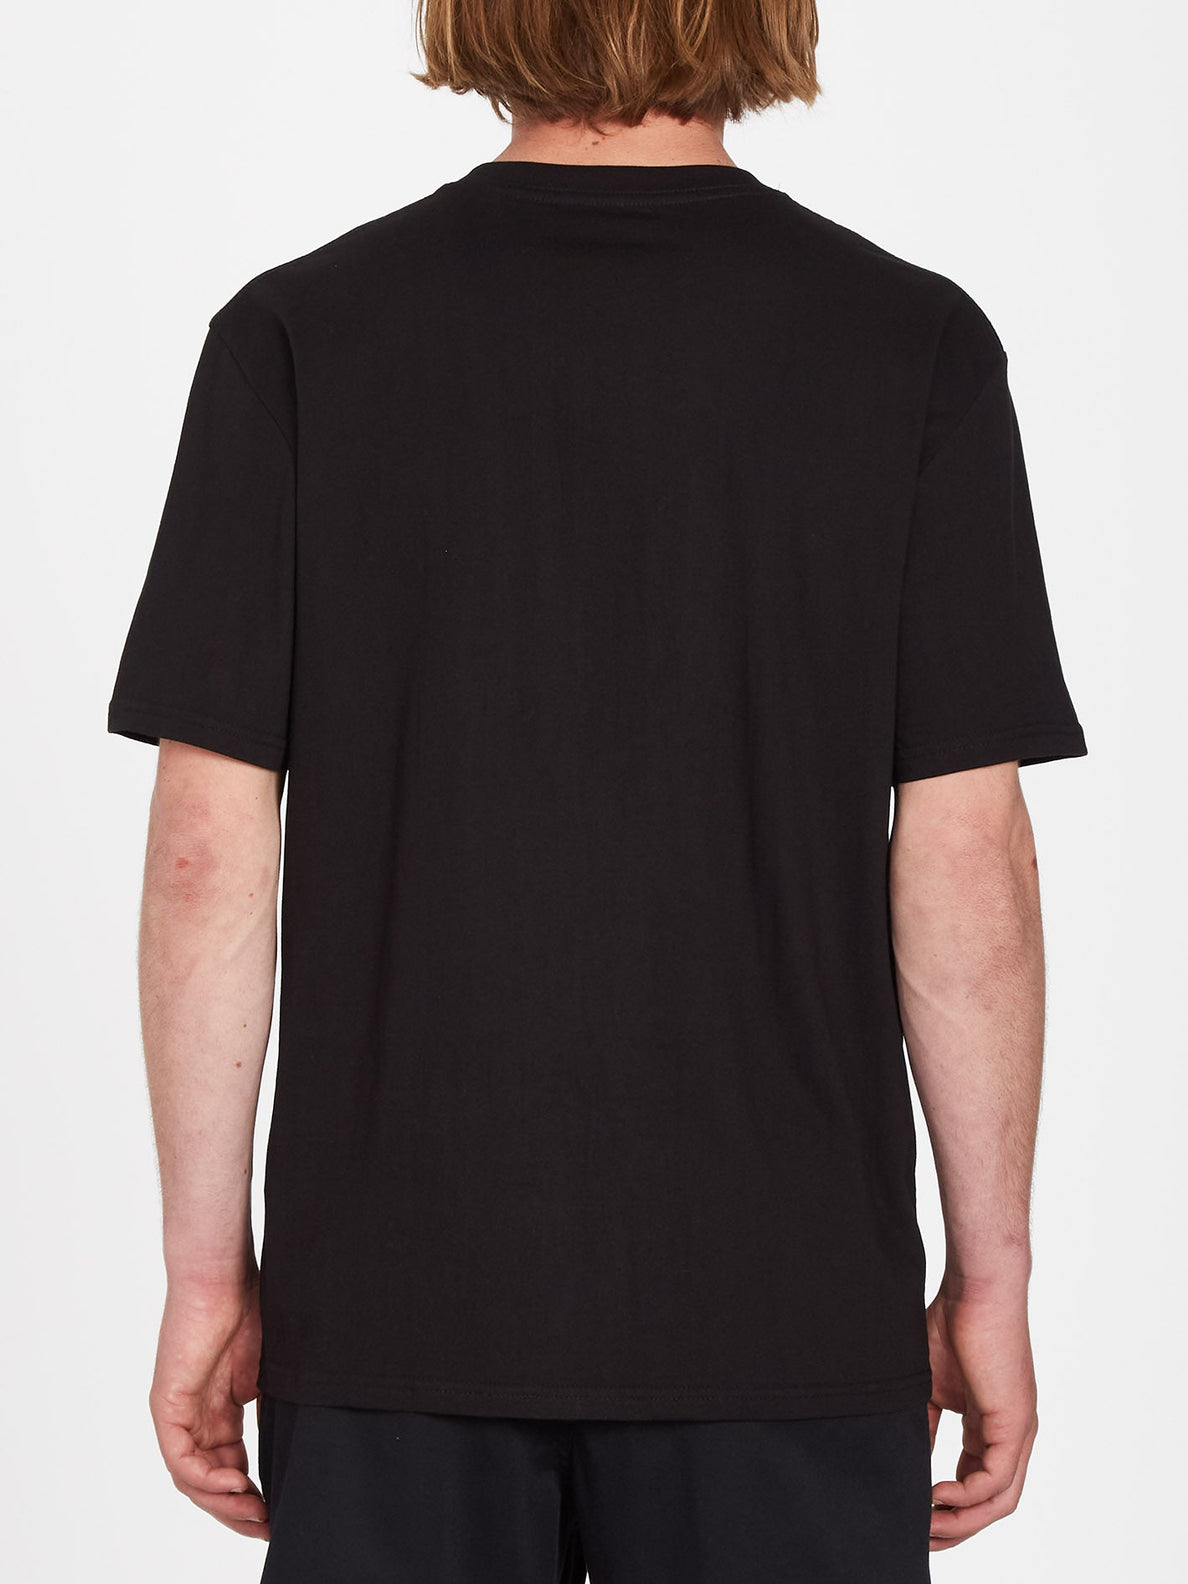 Neweuro T-shirt - BLACK (A3512353_BLK) [B]